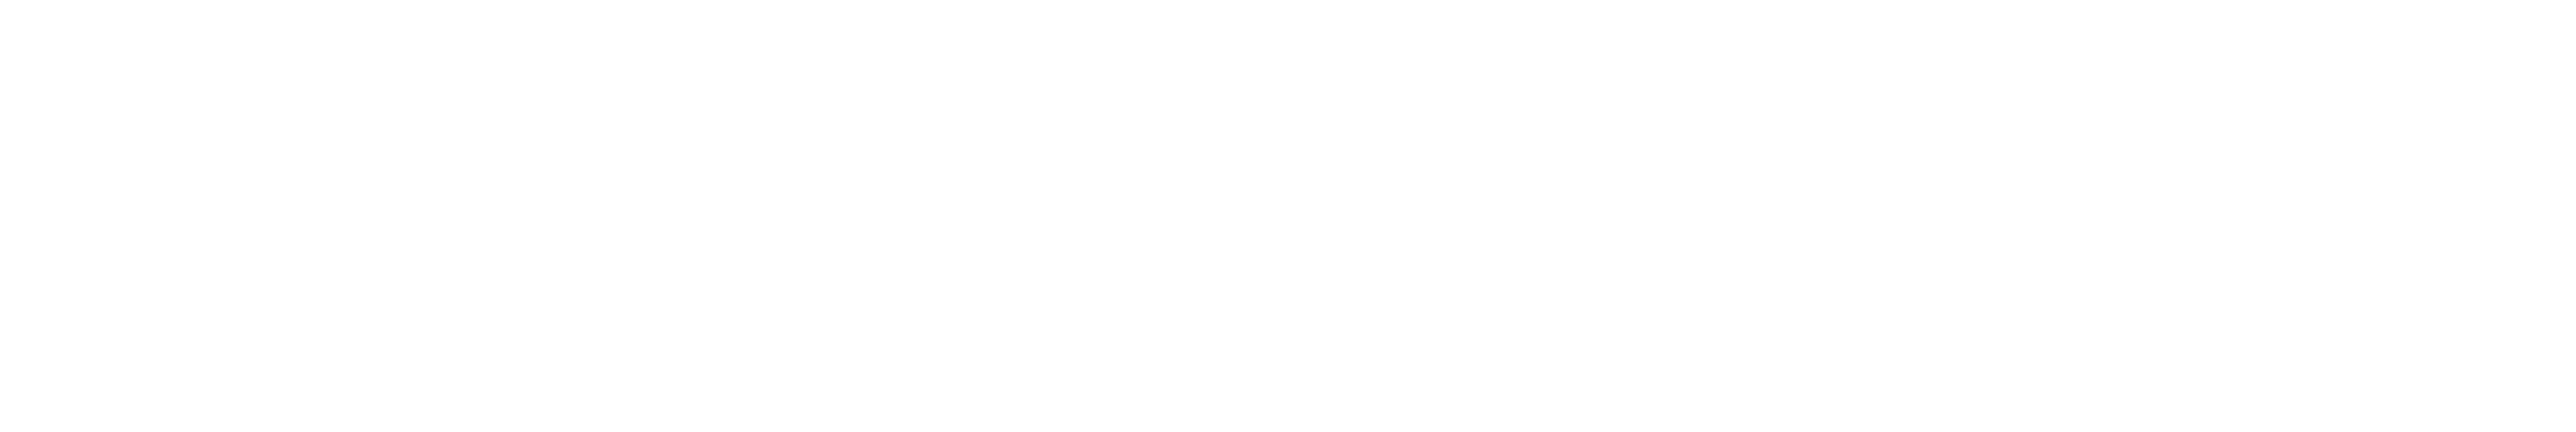 logo cybercare horizontal blanc